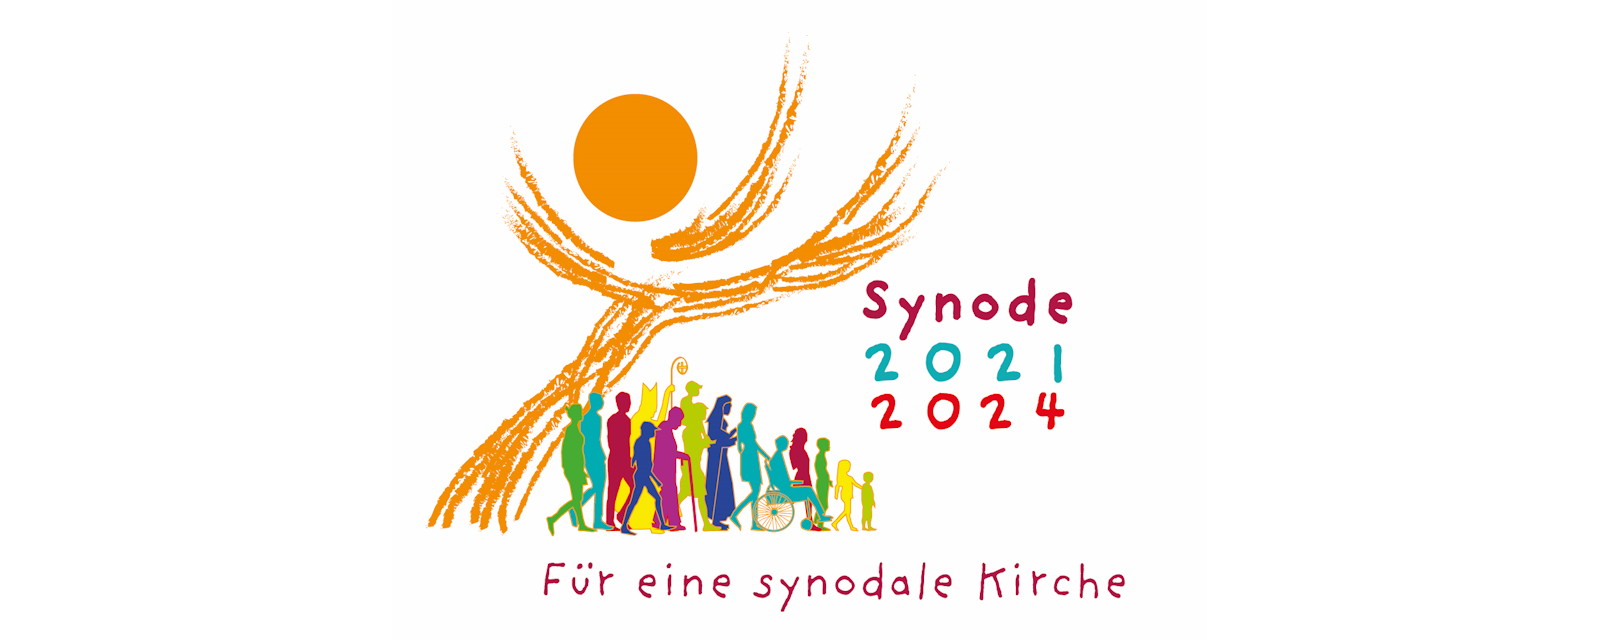 Das Logo der Synode 2021-2024